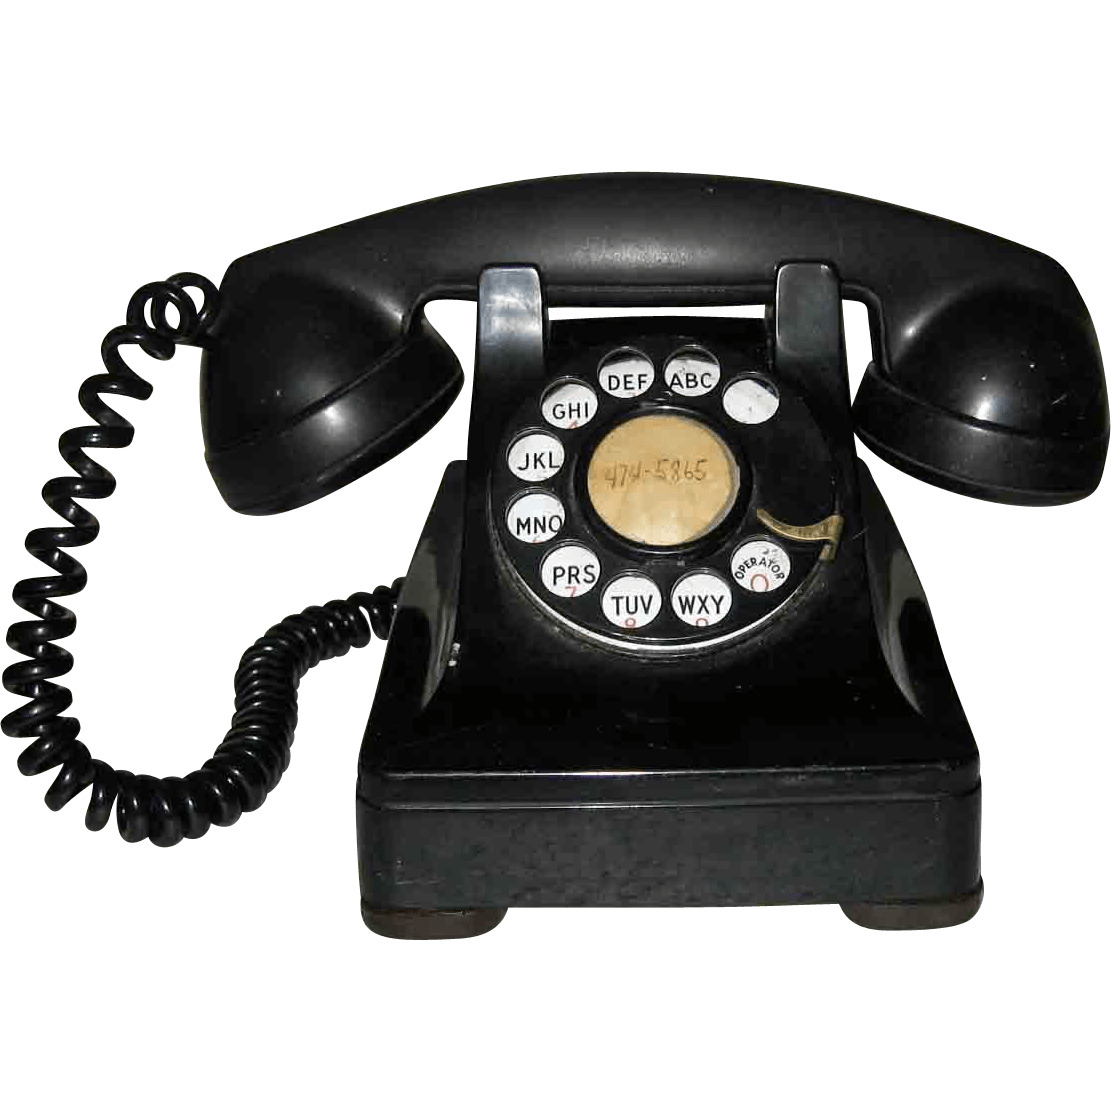 Old Bakelite Phone png icons